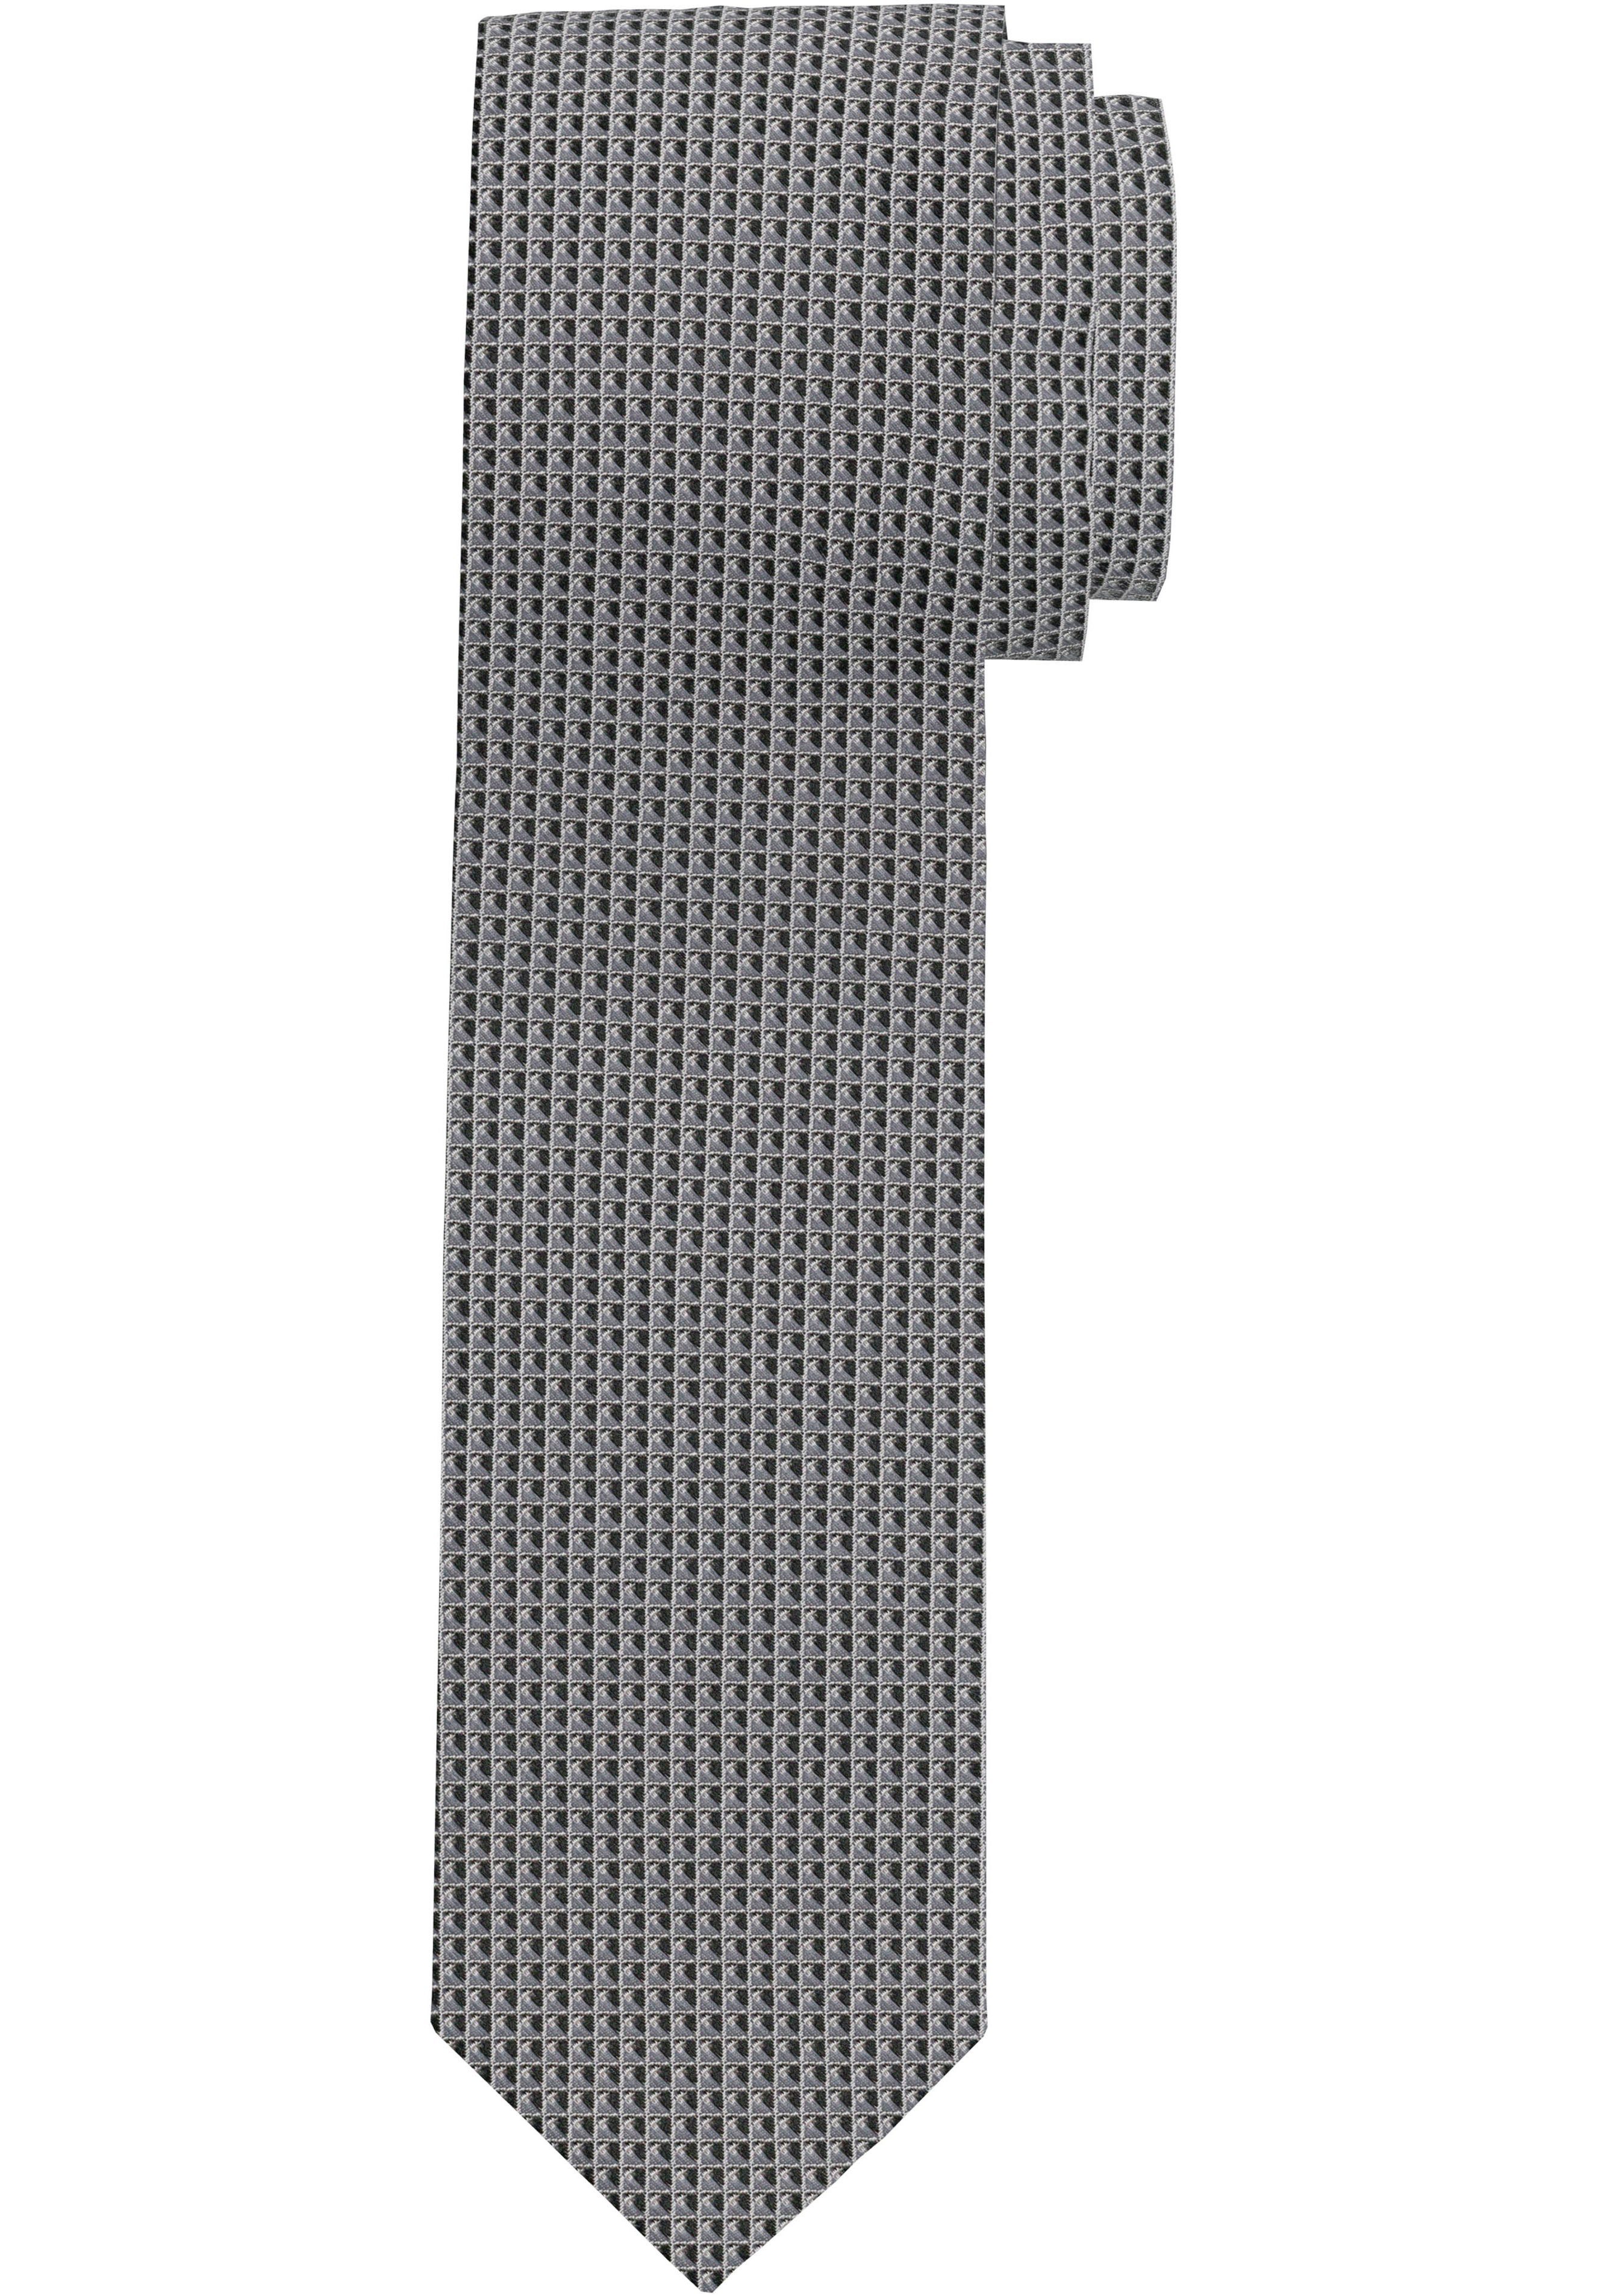 OLYMP Krawatte Strukturierte anthrazit Krawatte